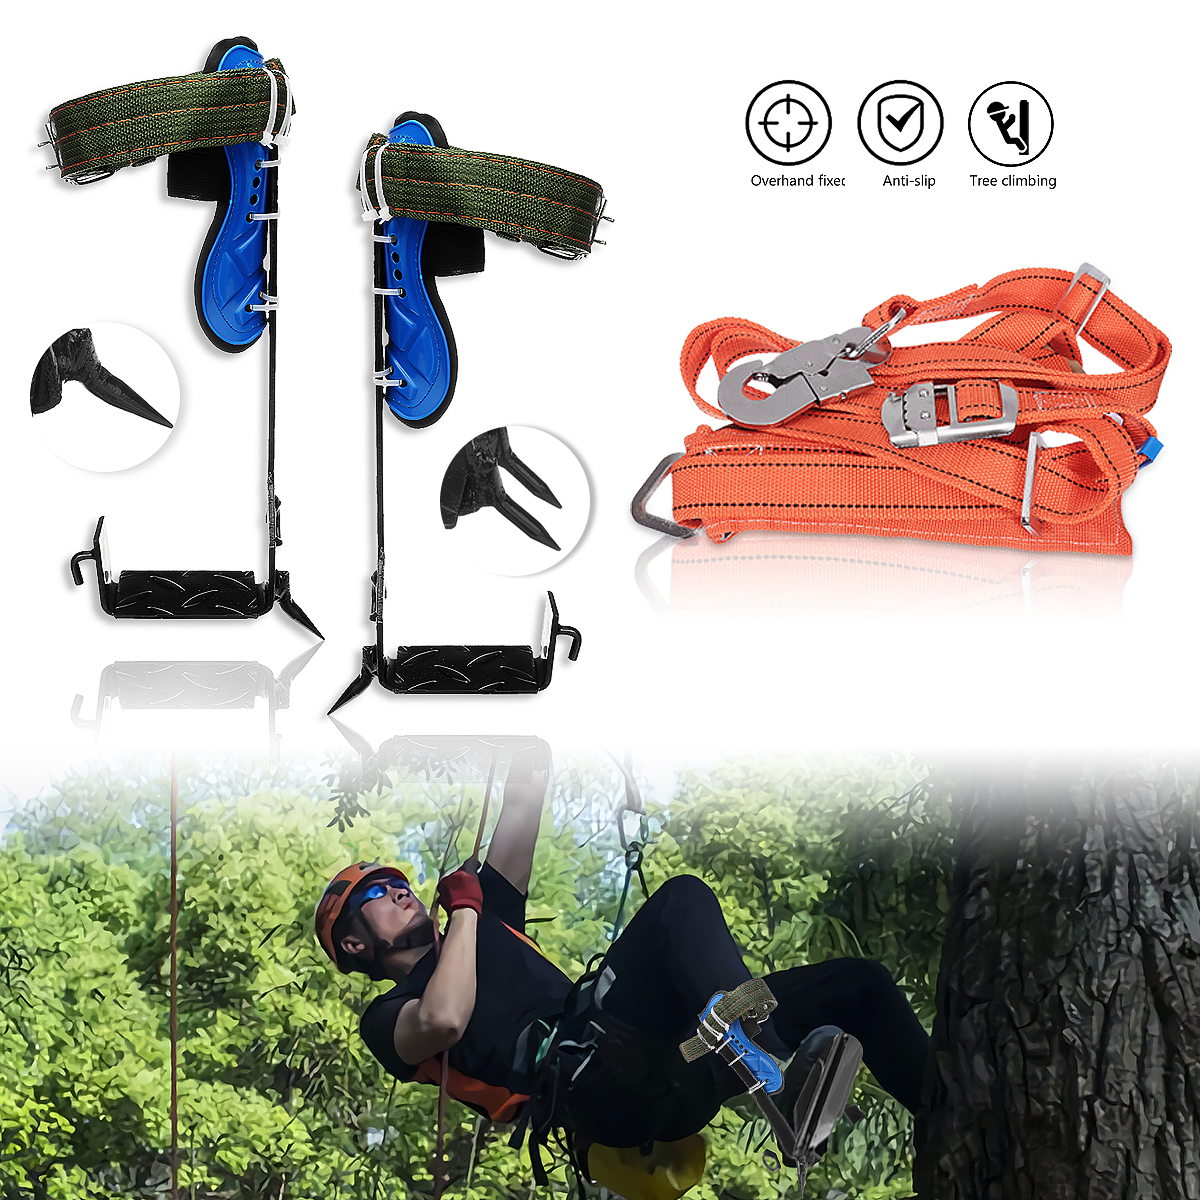 Tree-Climbing-Spike-Set-Safety-Belt-WGear-Adjustable-Lanyard-Stainless-Steel-Climbing-Tool-1564966